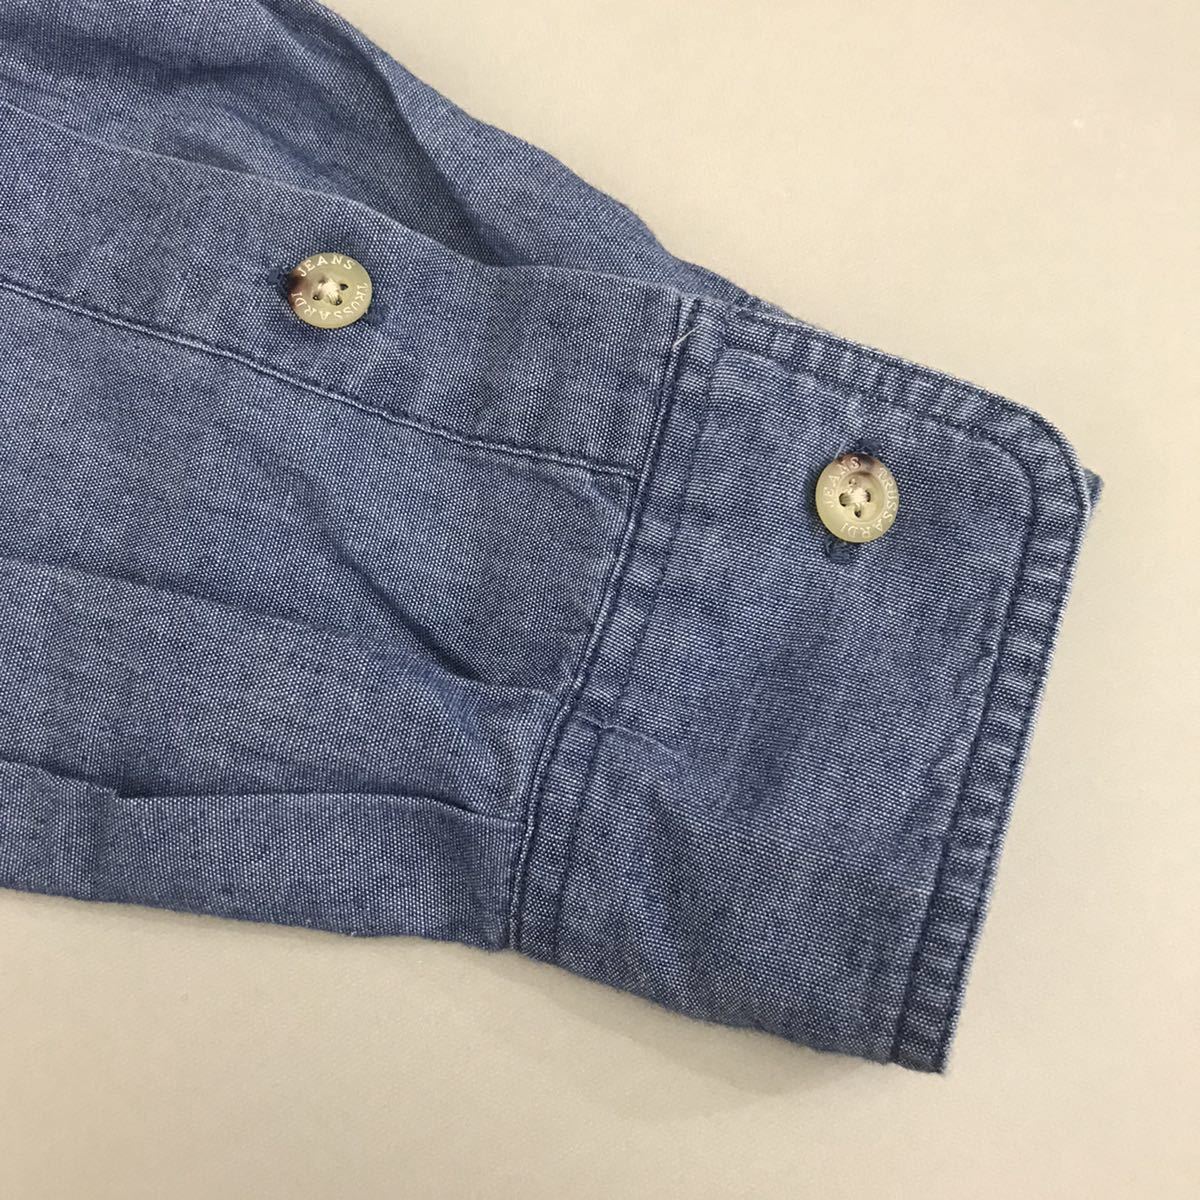  Trussardi TRUSSARDI кнопка down рубашка джинсы cut and sewn Denim цвет Logo вышивка b люмен z мужской 48 размер ♭*-